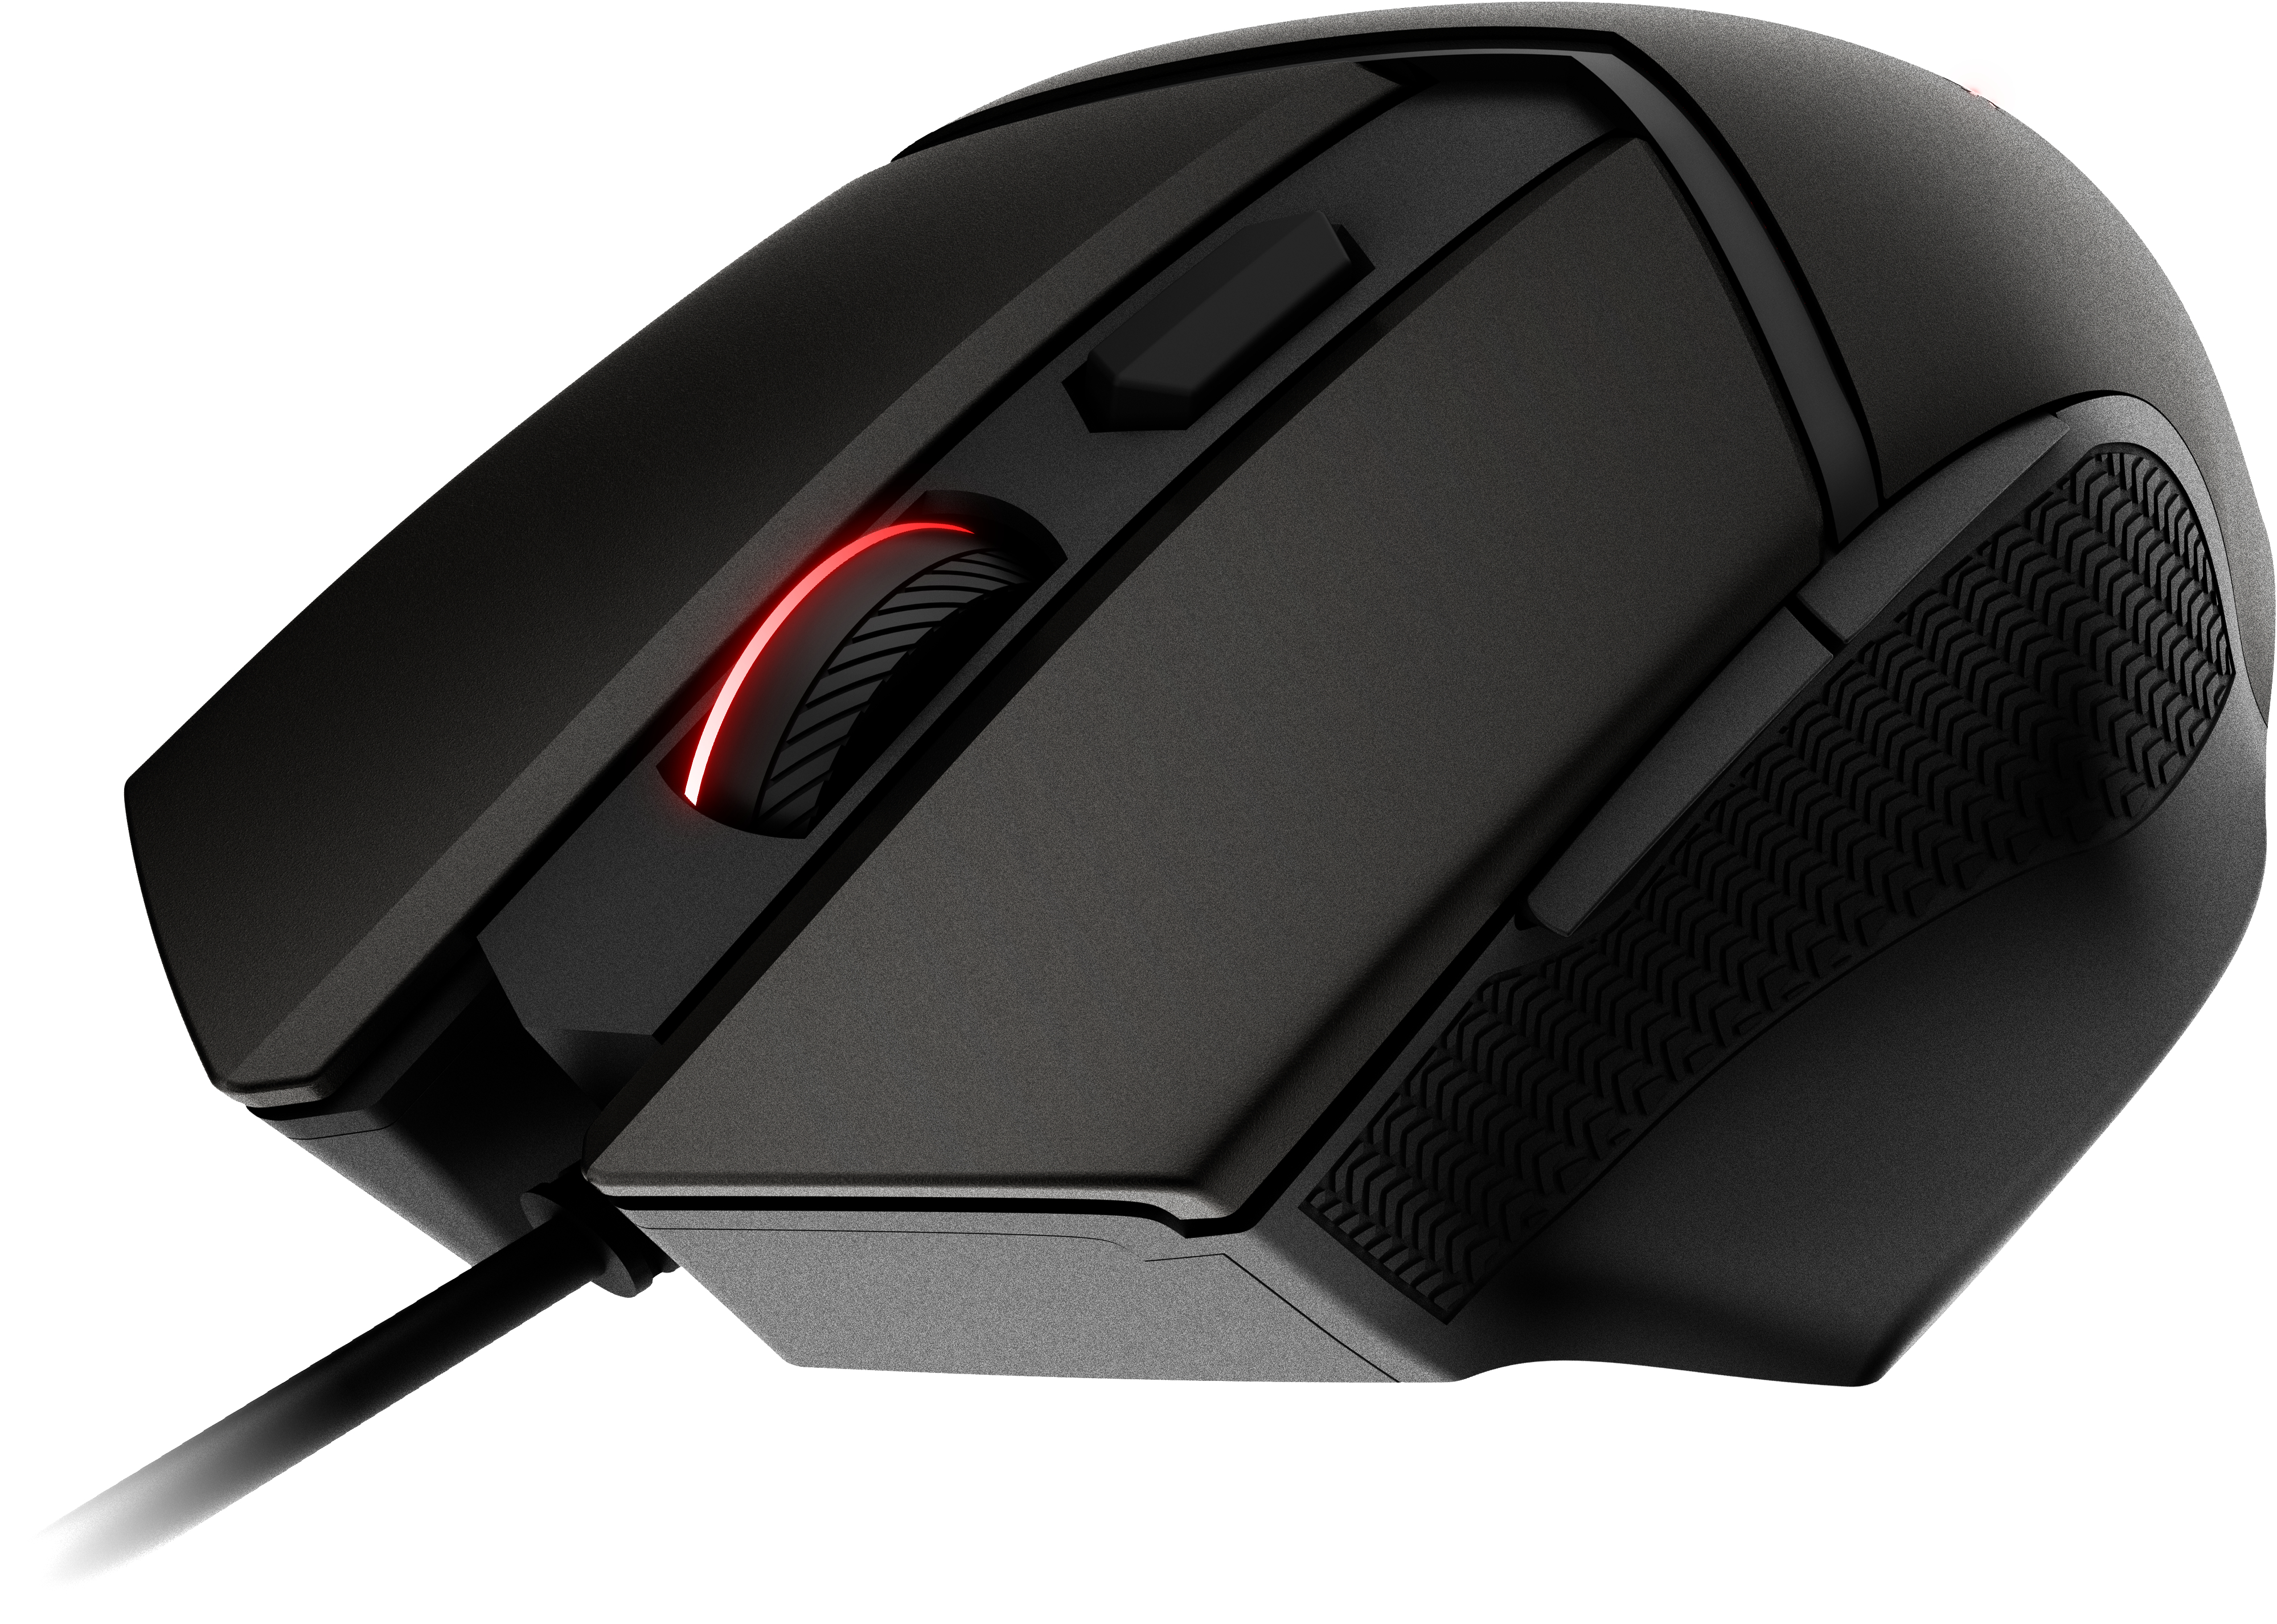 Sensor, Streifen, MSI PAW-3309 RGB Elite Maus Gaming schwarz, Red GM20 6 Tasten, 400 DPI, - (kabelgebunden, 6400 Clutch Logo)